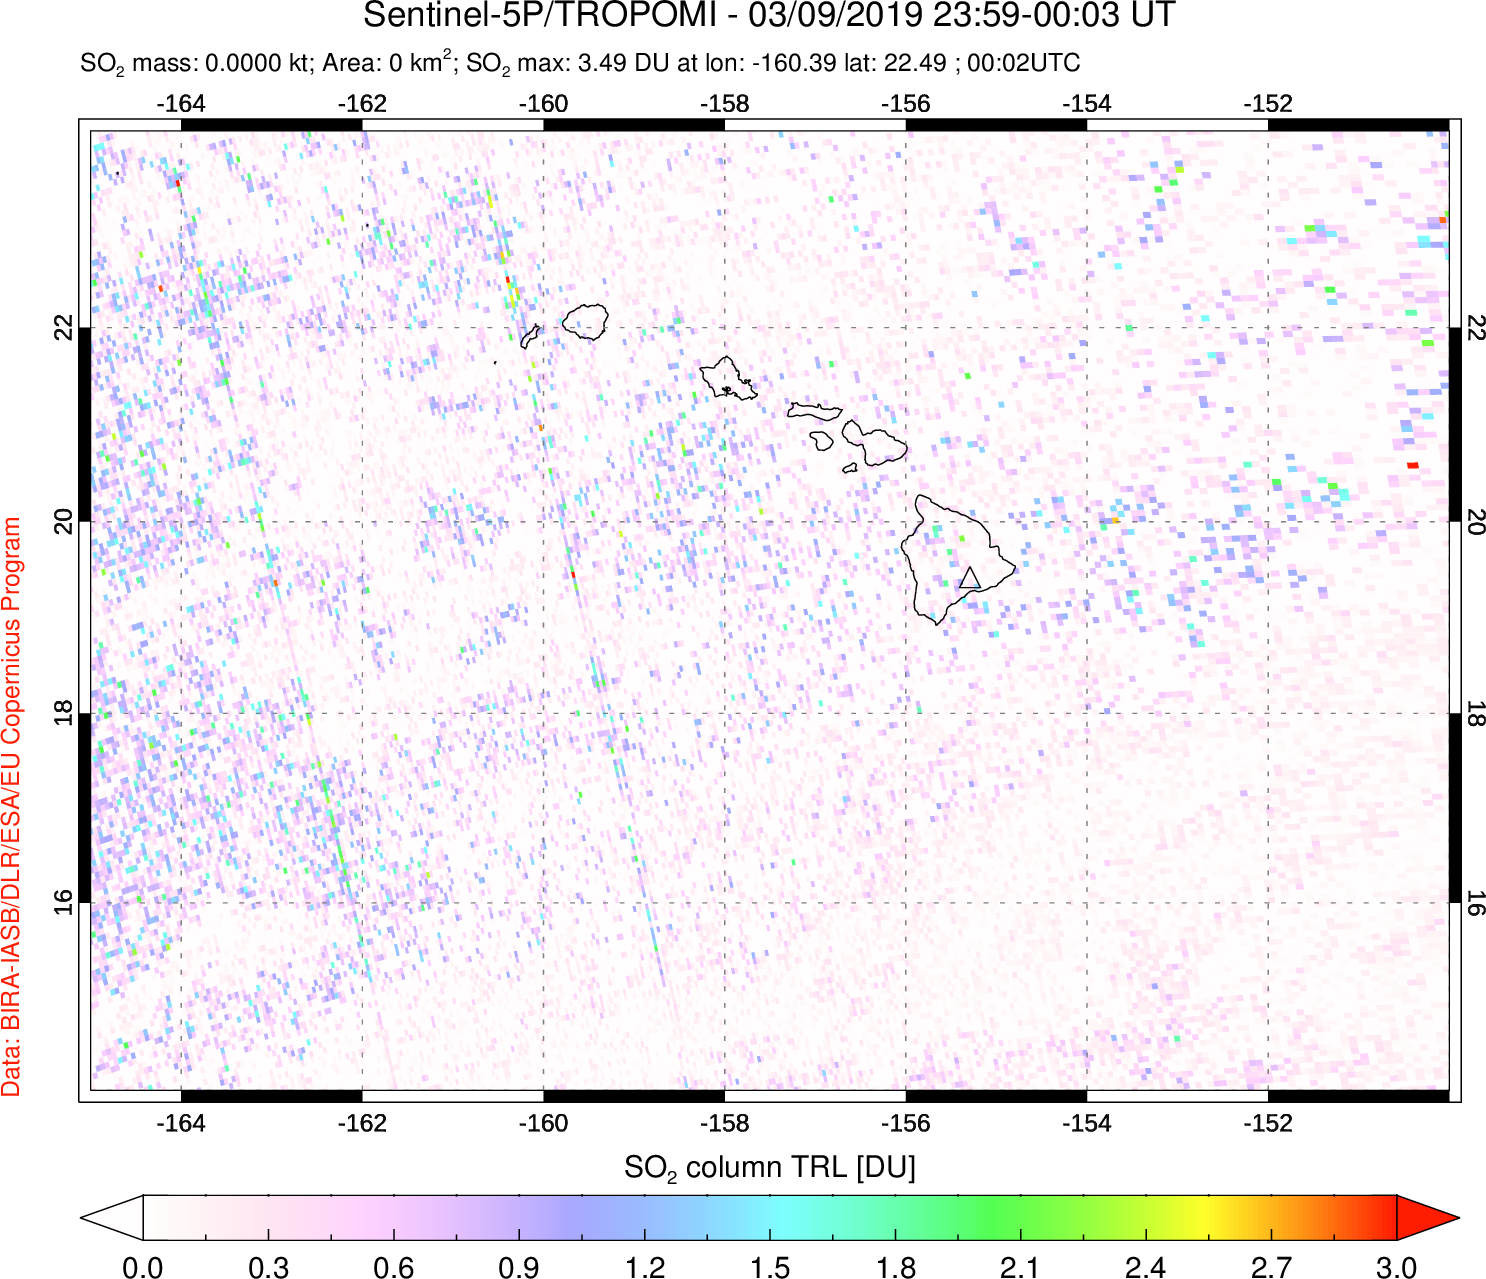 A sulfur dioxide image over Hawaii, USA on Mar 09, 2019.